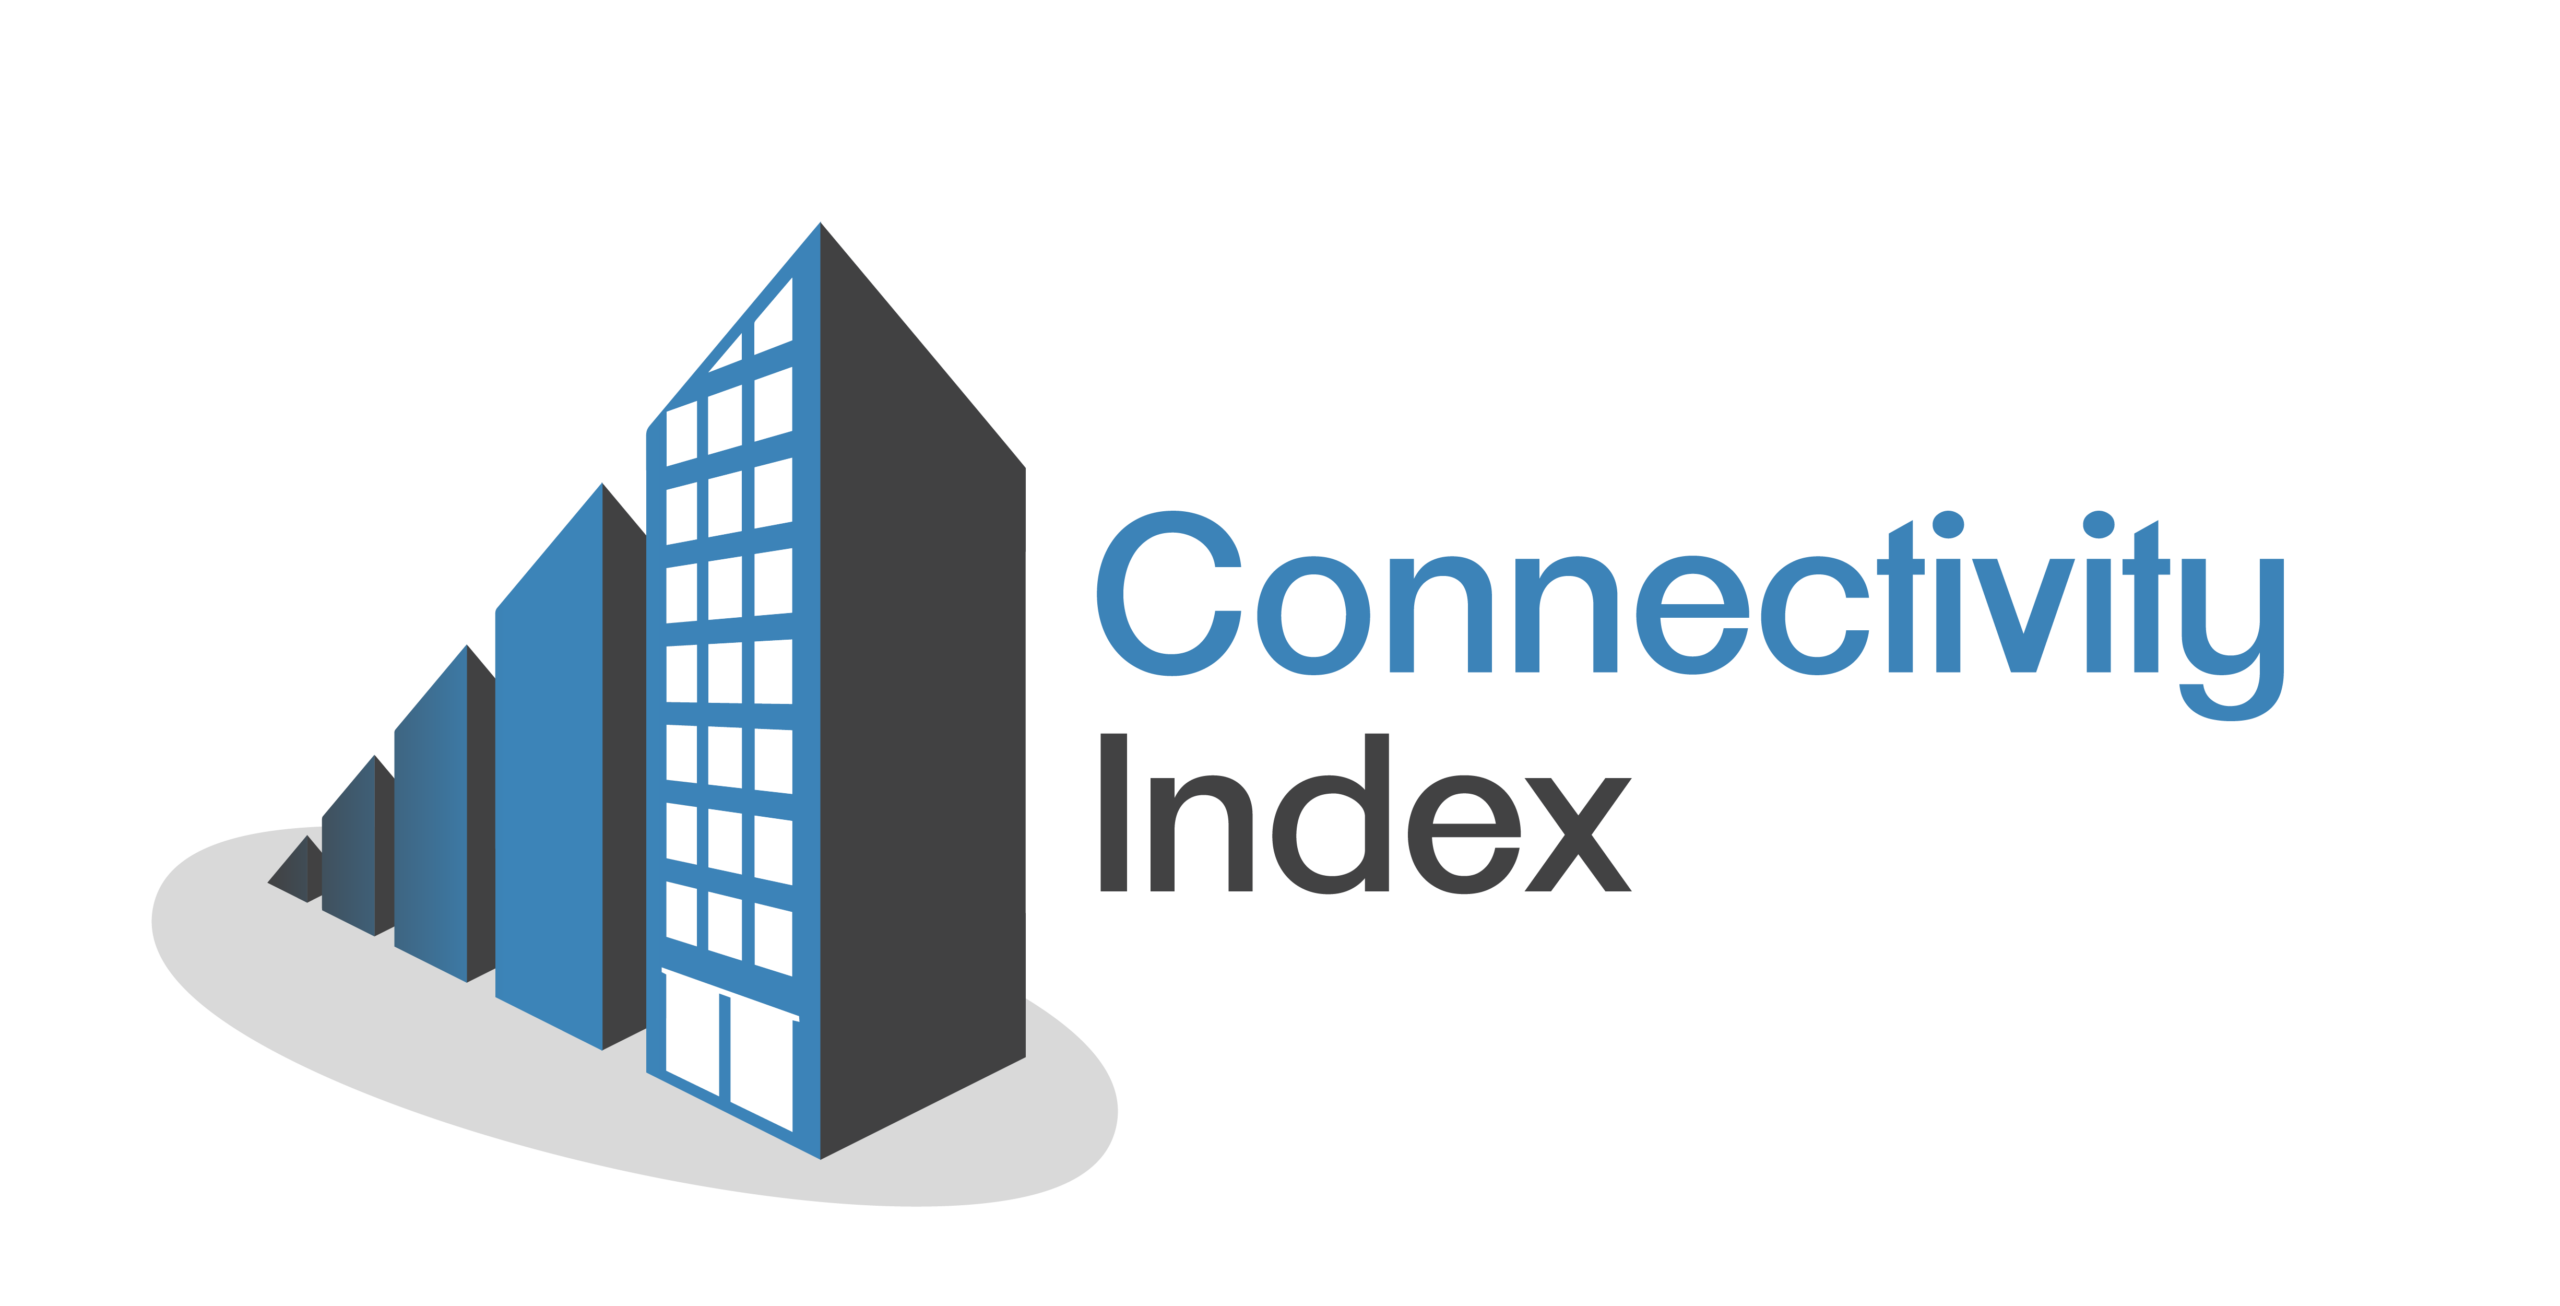 Connectivity Index